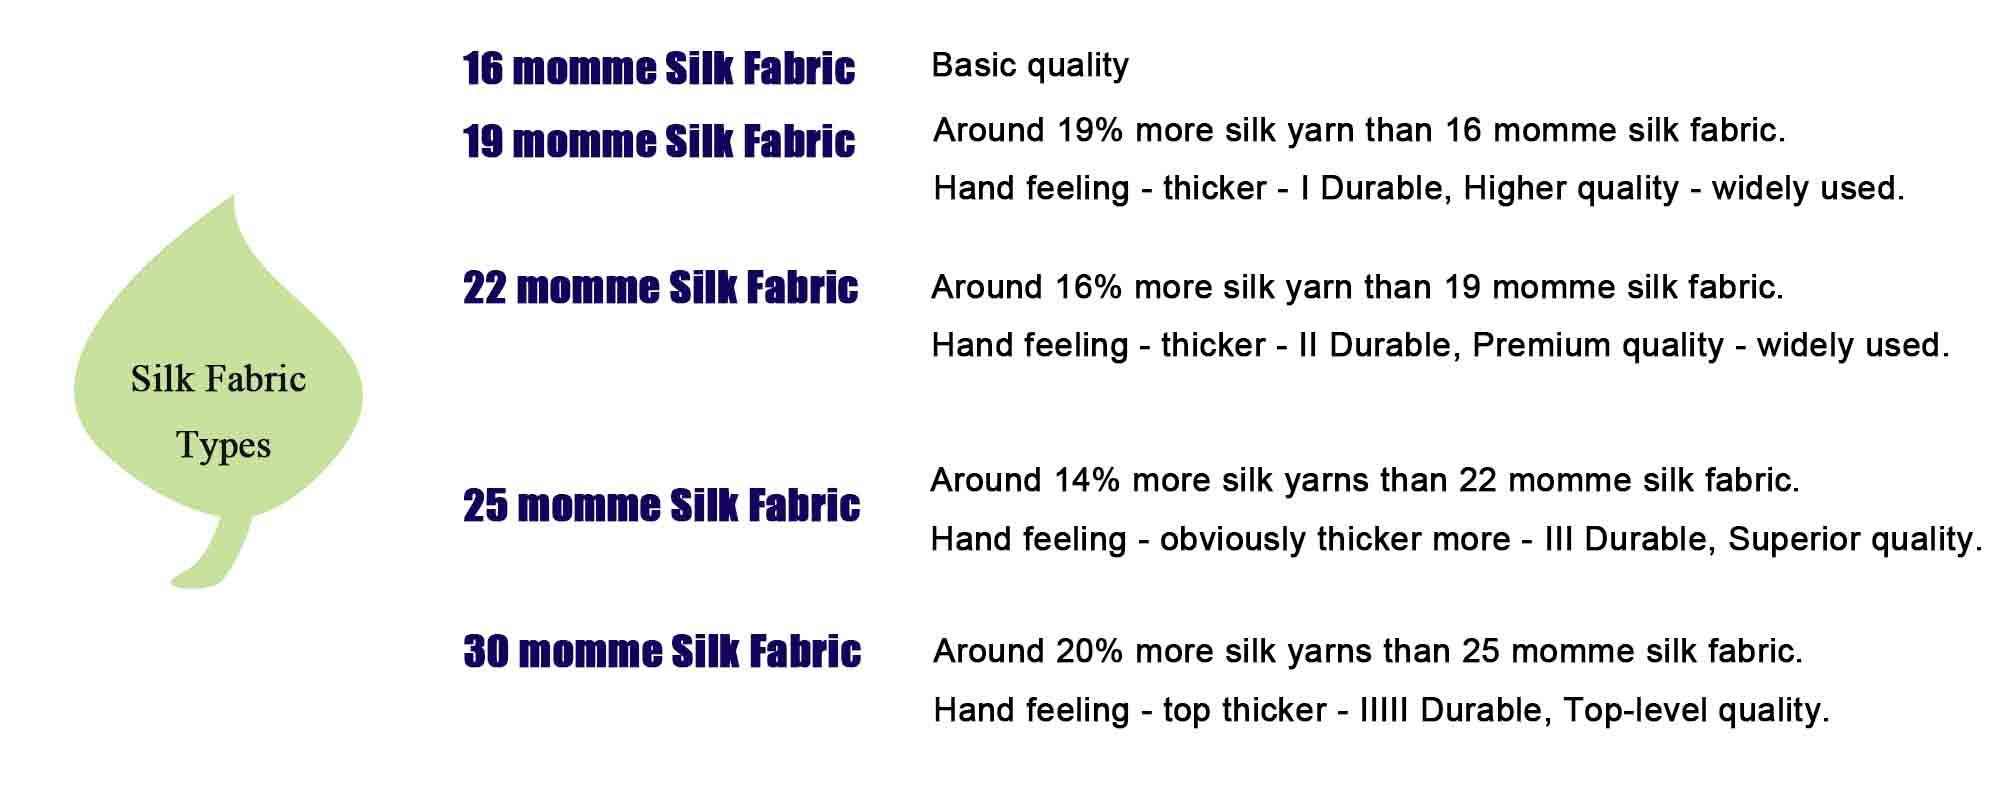 silk fabric quality